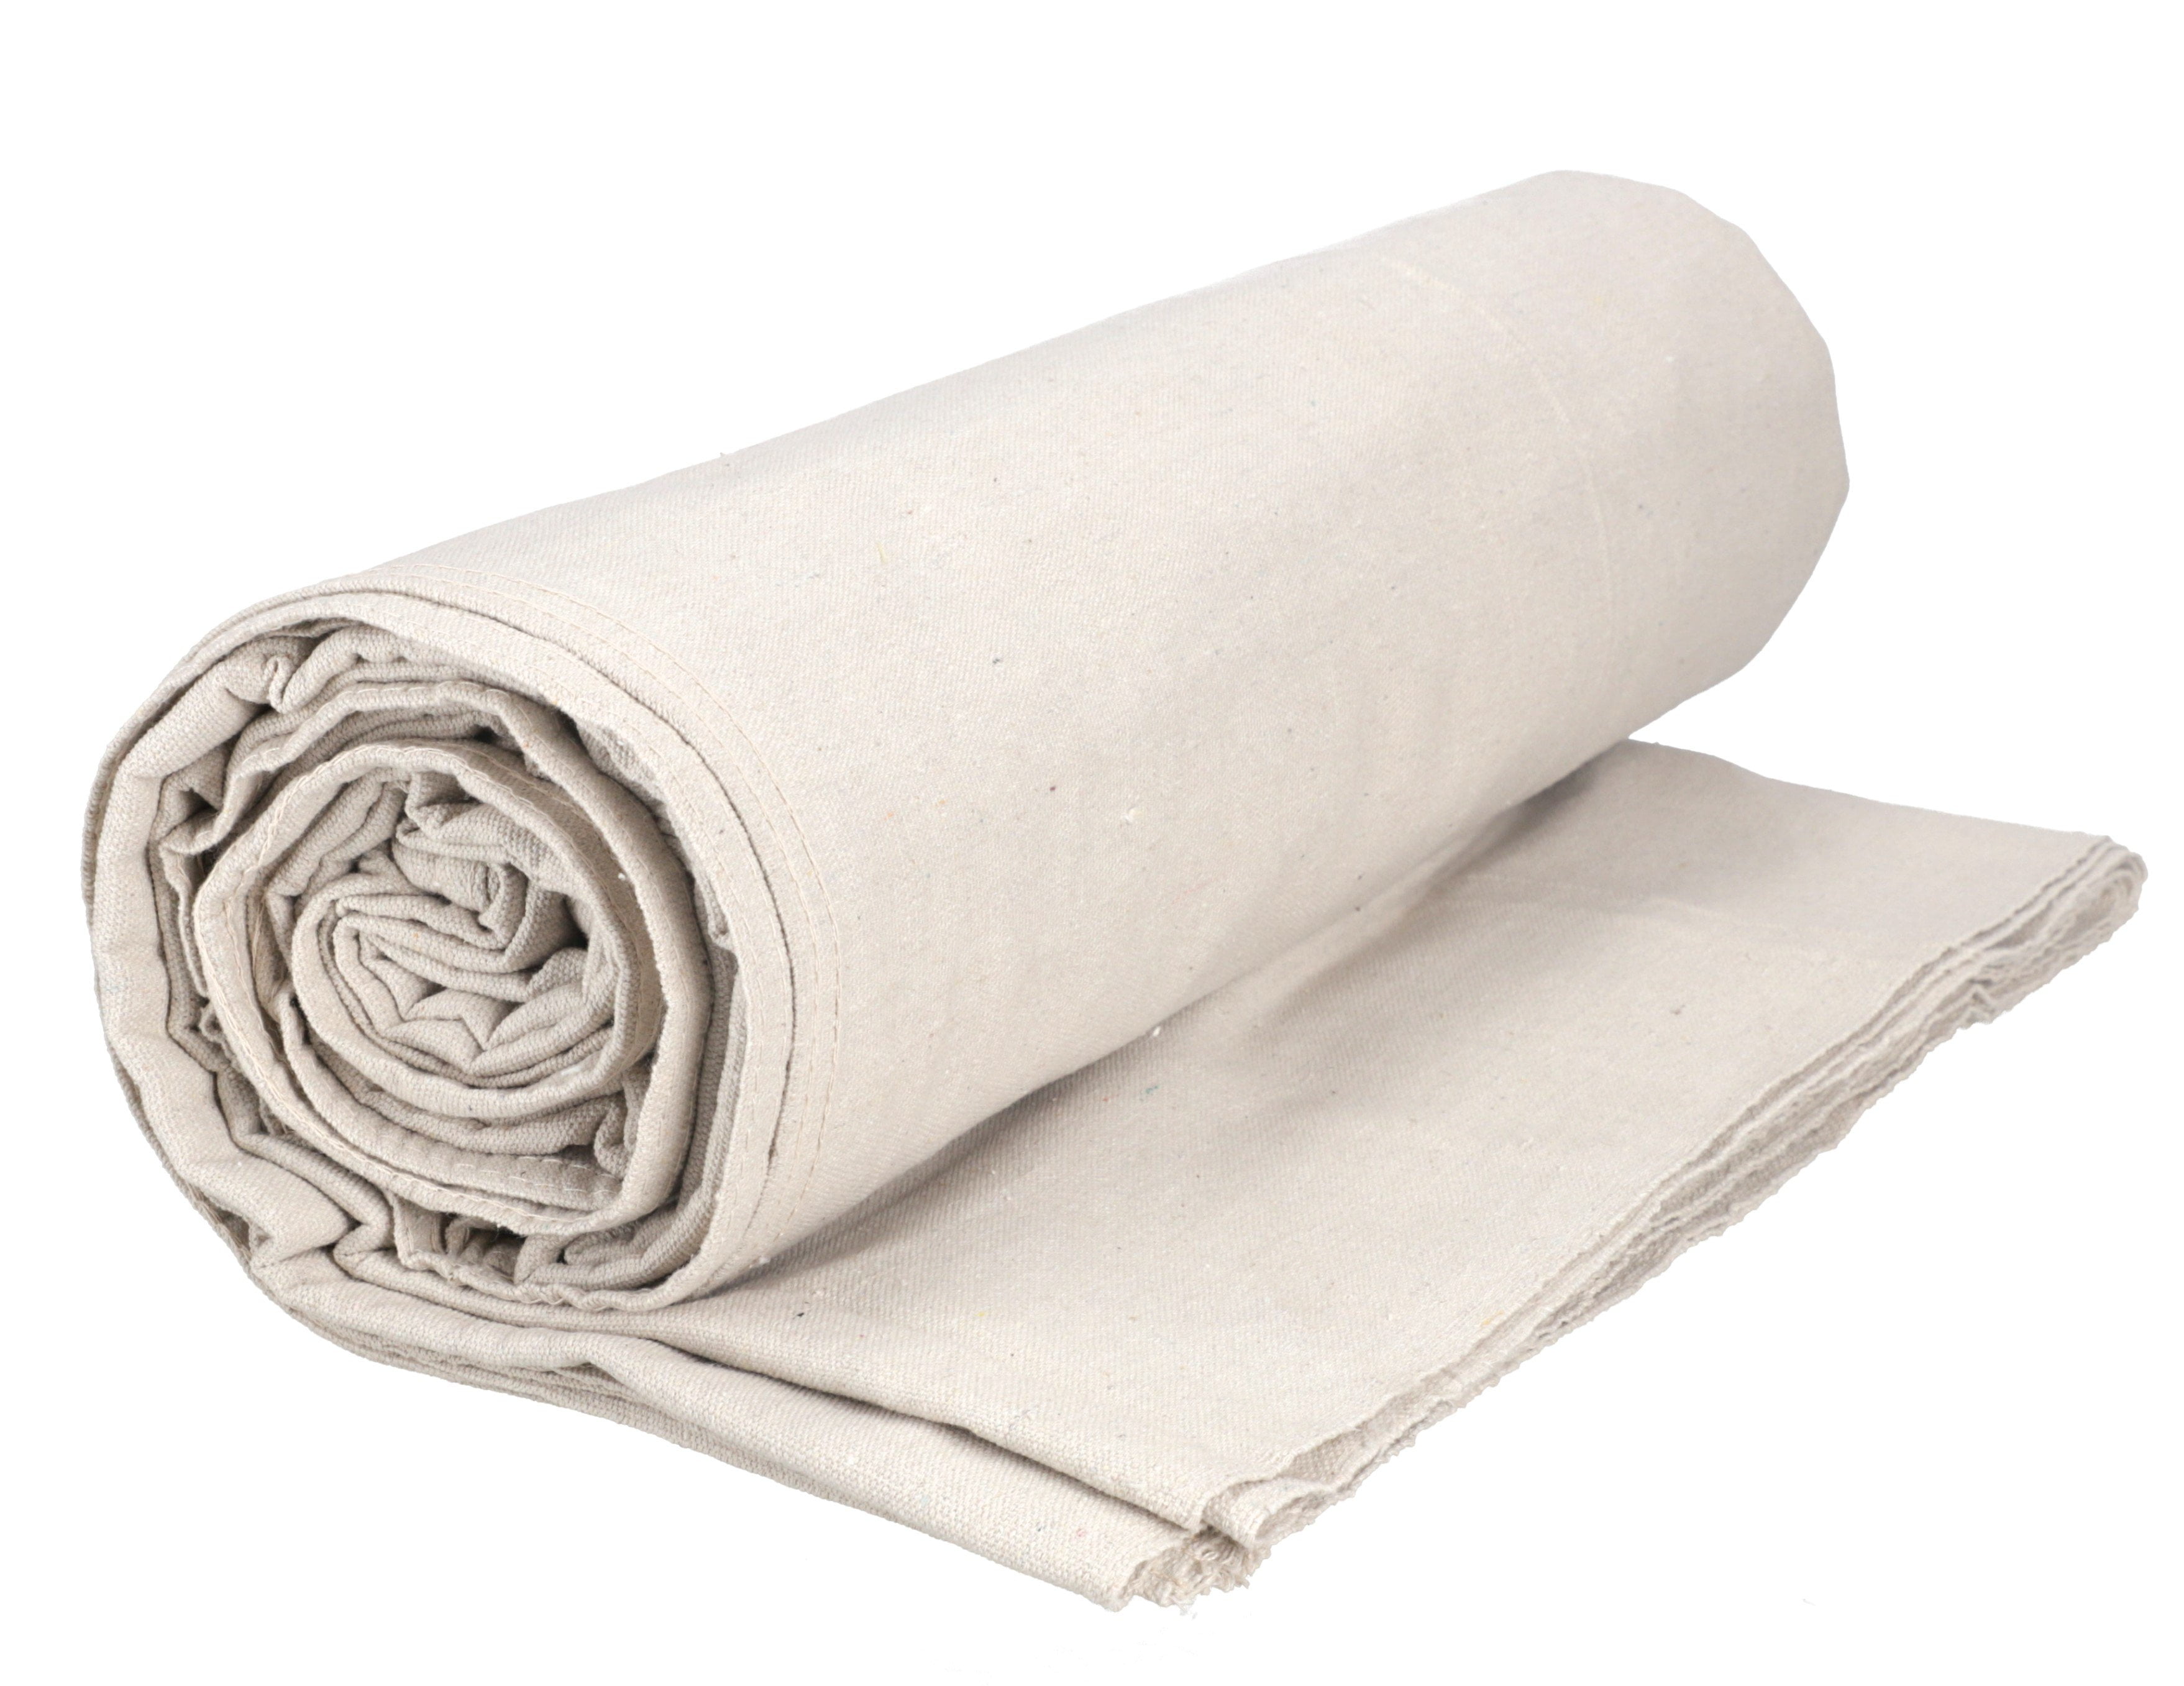 Buy CABIN Natural Canvas Drop Cloth Pillow 100% Cotton 18x28